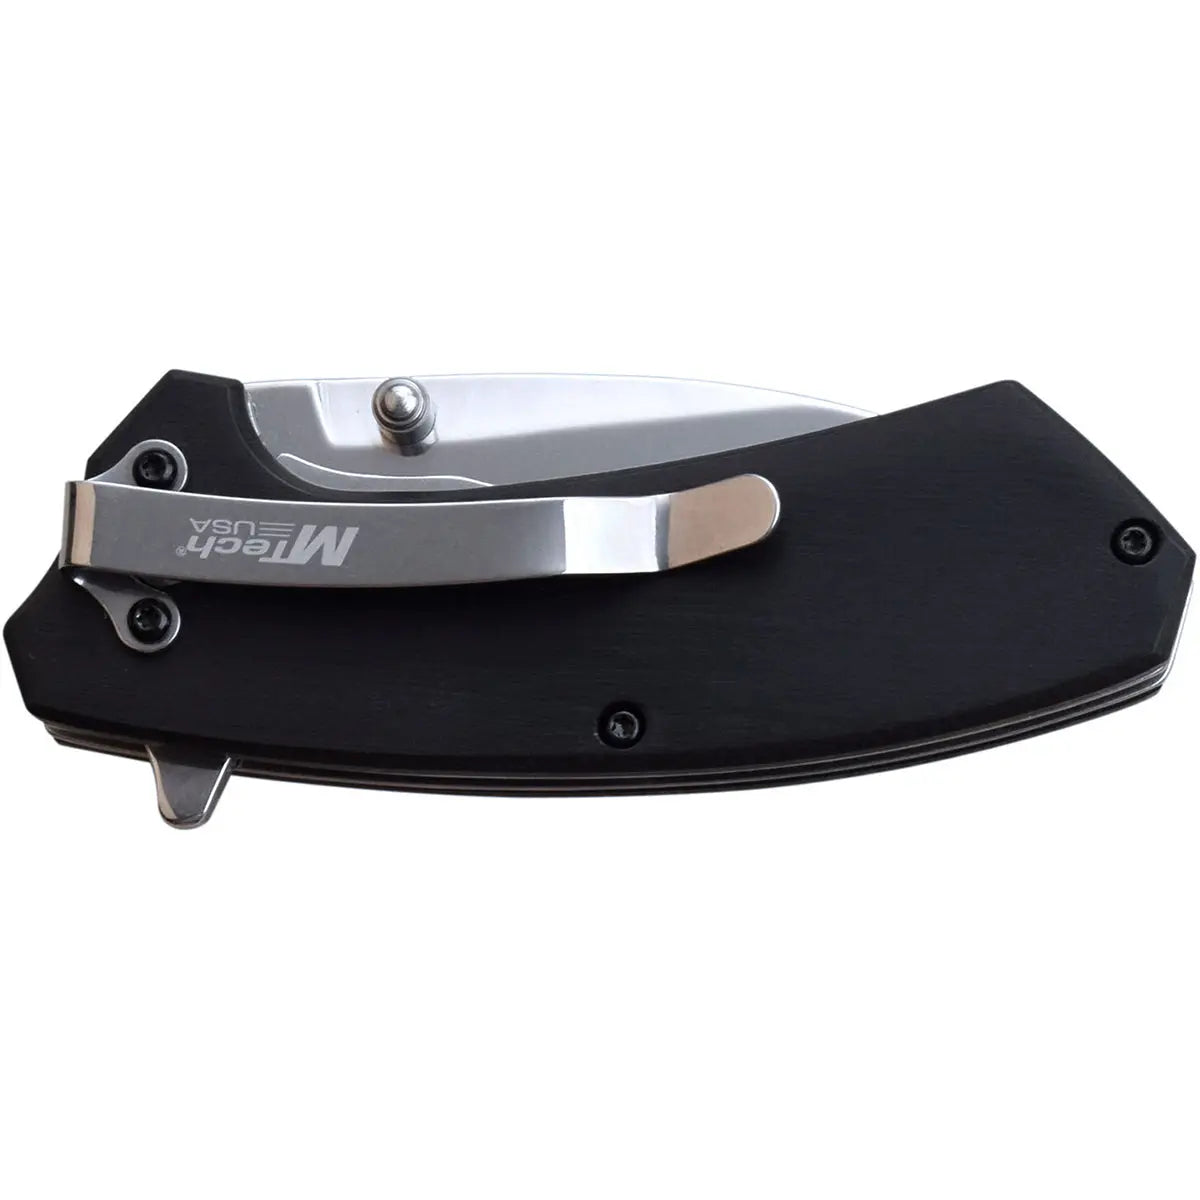 MTech USA Linerlock Spring Assisted Folding Knife, Pakkawood Black, MT-A1163BK M-Tech